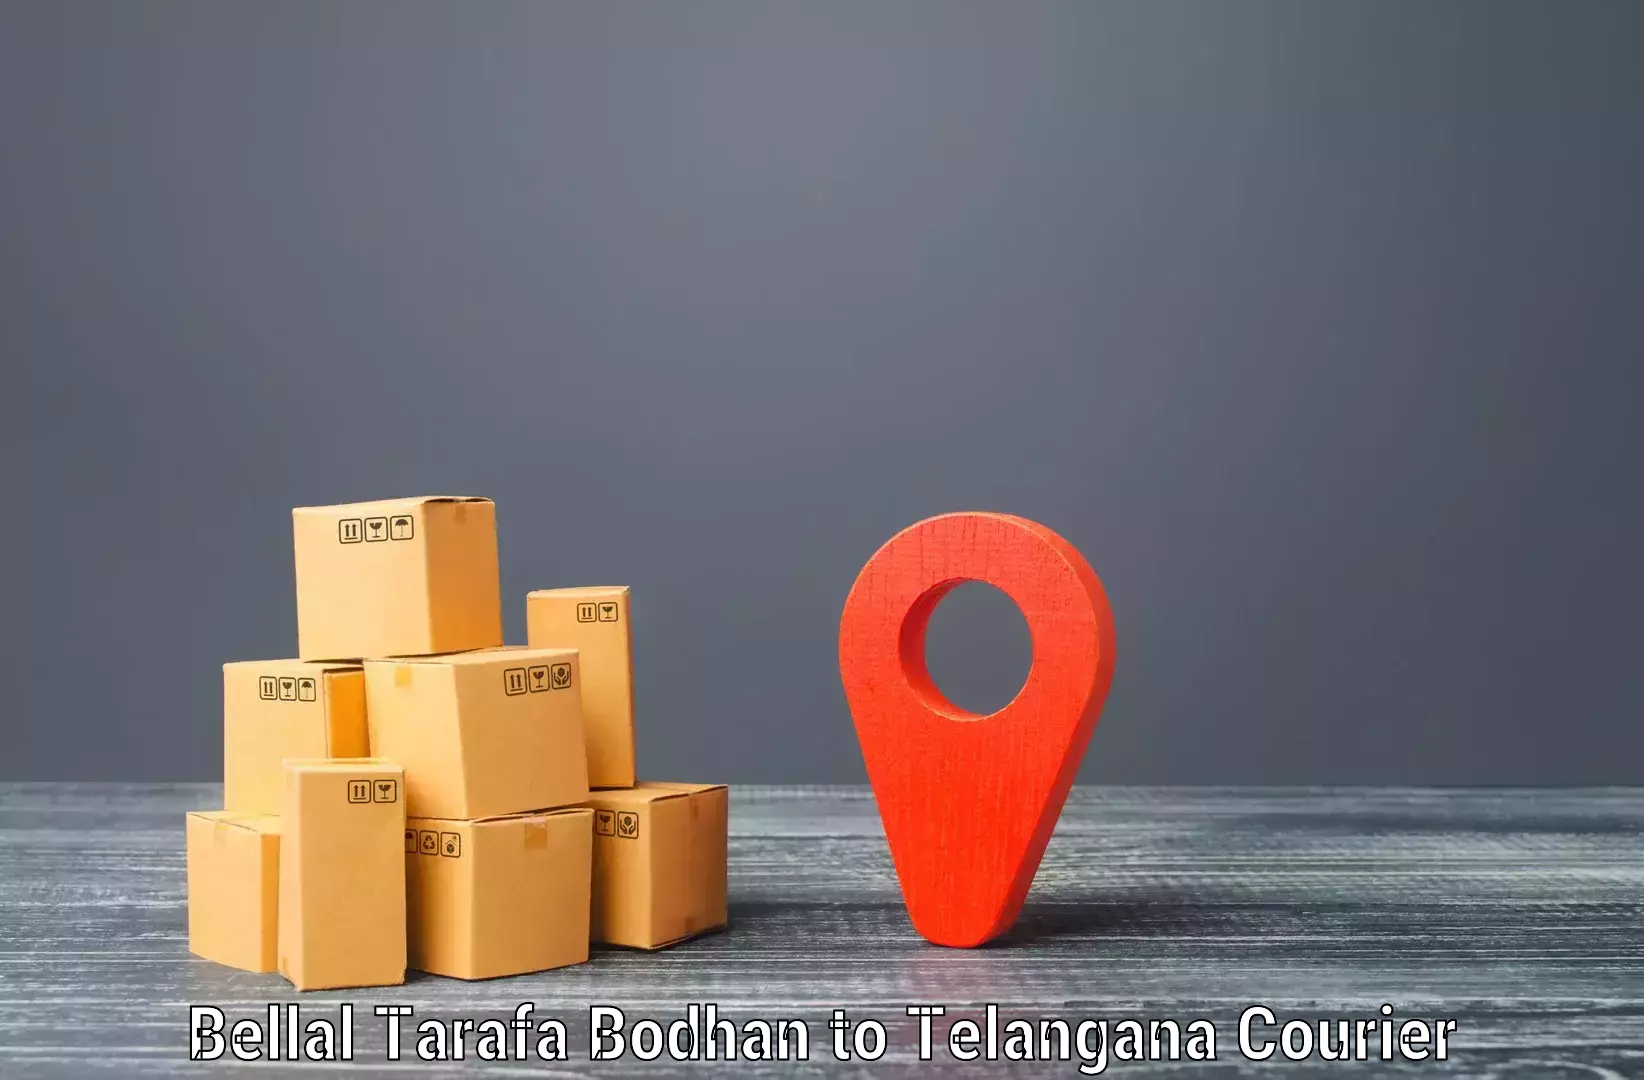 State-of-the-art courier technology Bellal Tarafa Bodhan to Kosgi